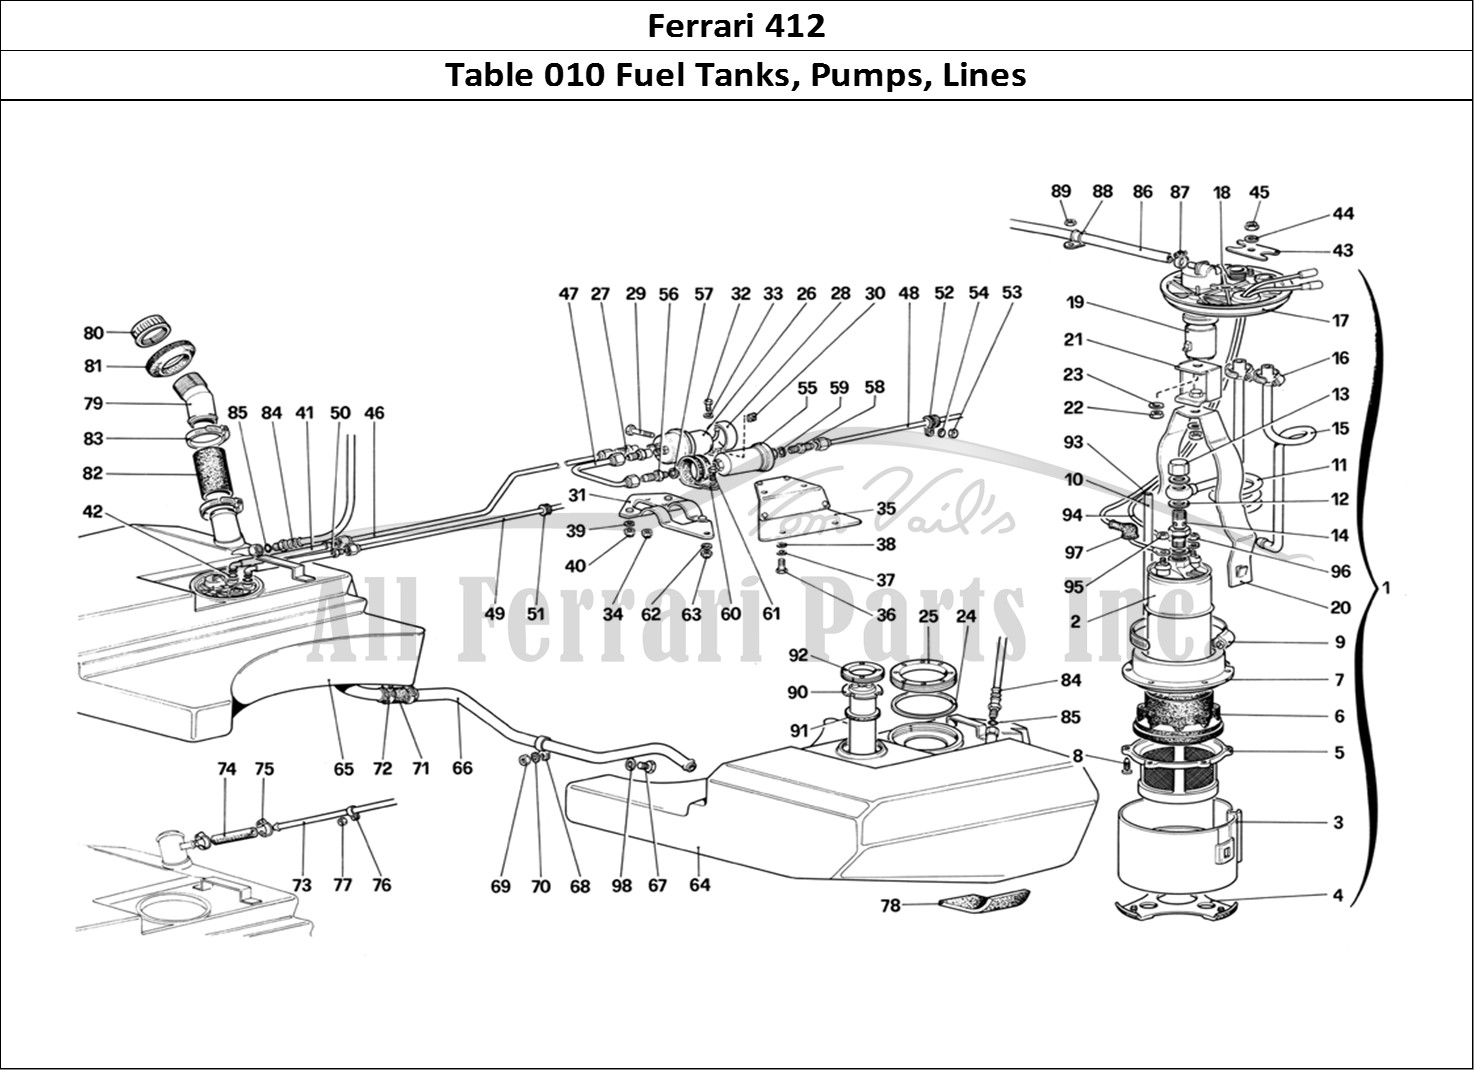 Ferrari Parts Ferrari 412 (Mechanical) Page 010 Fuel Tanks, Pumps, Lines